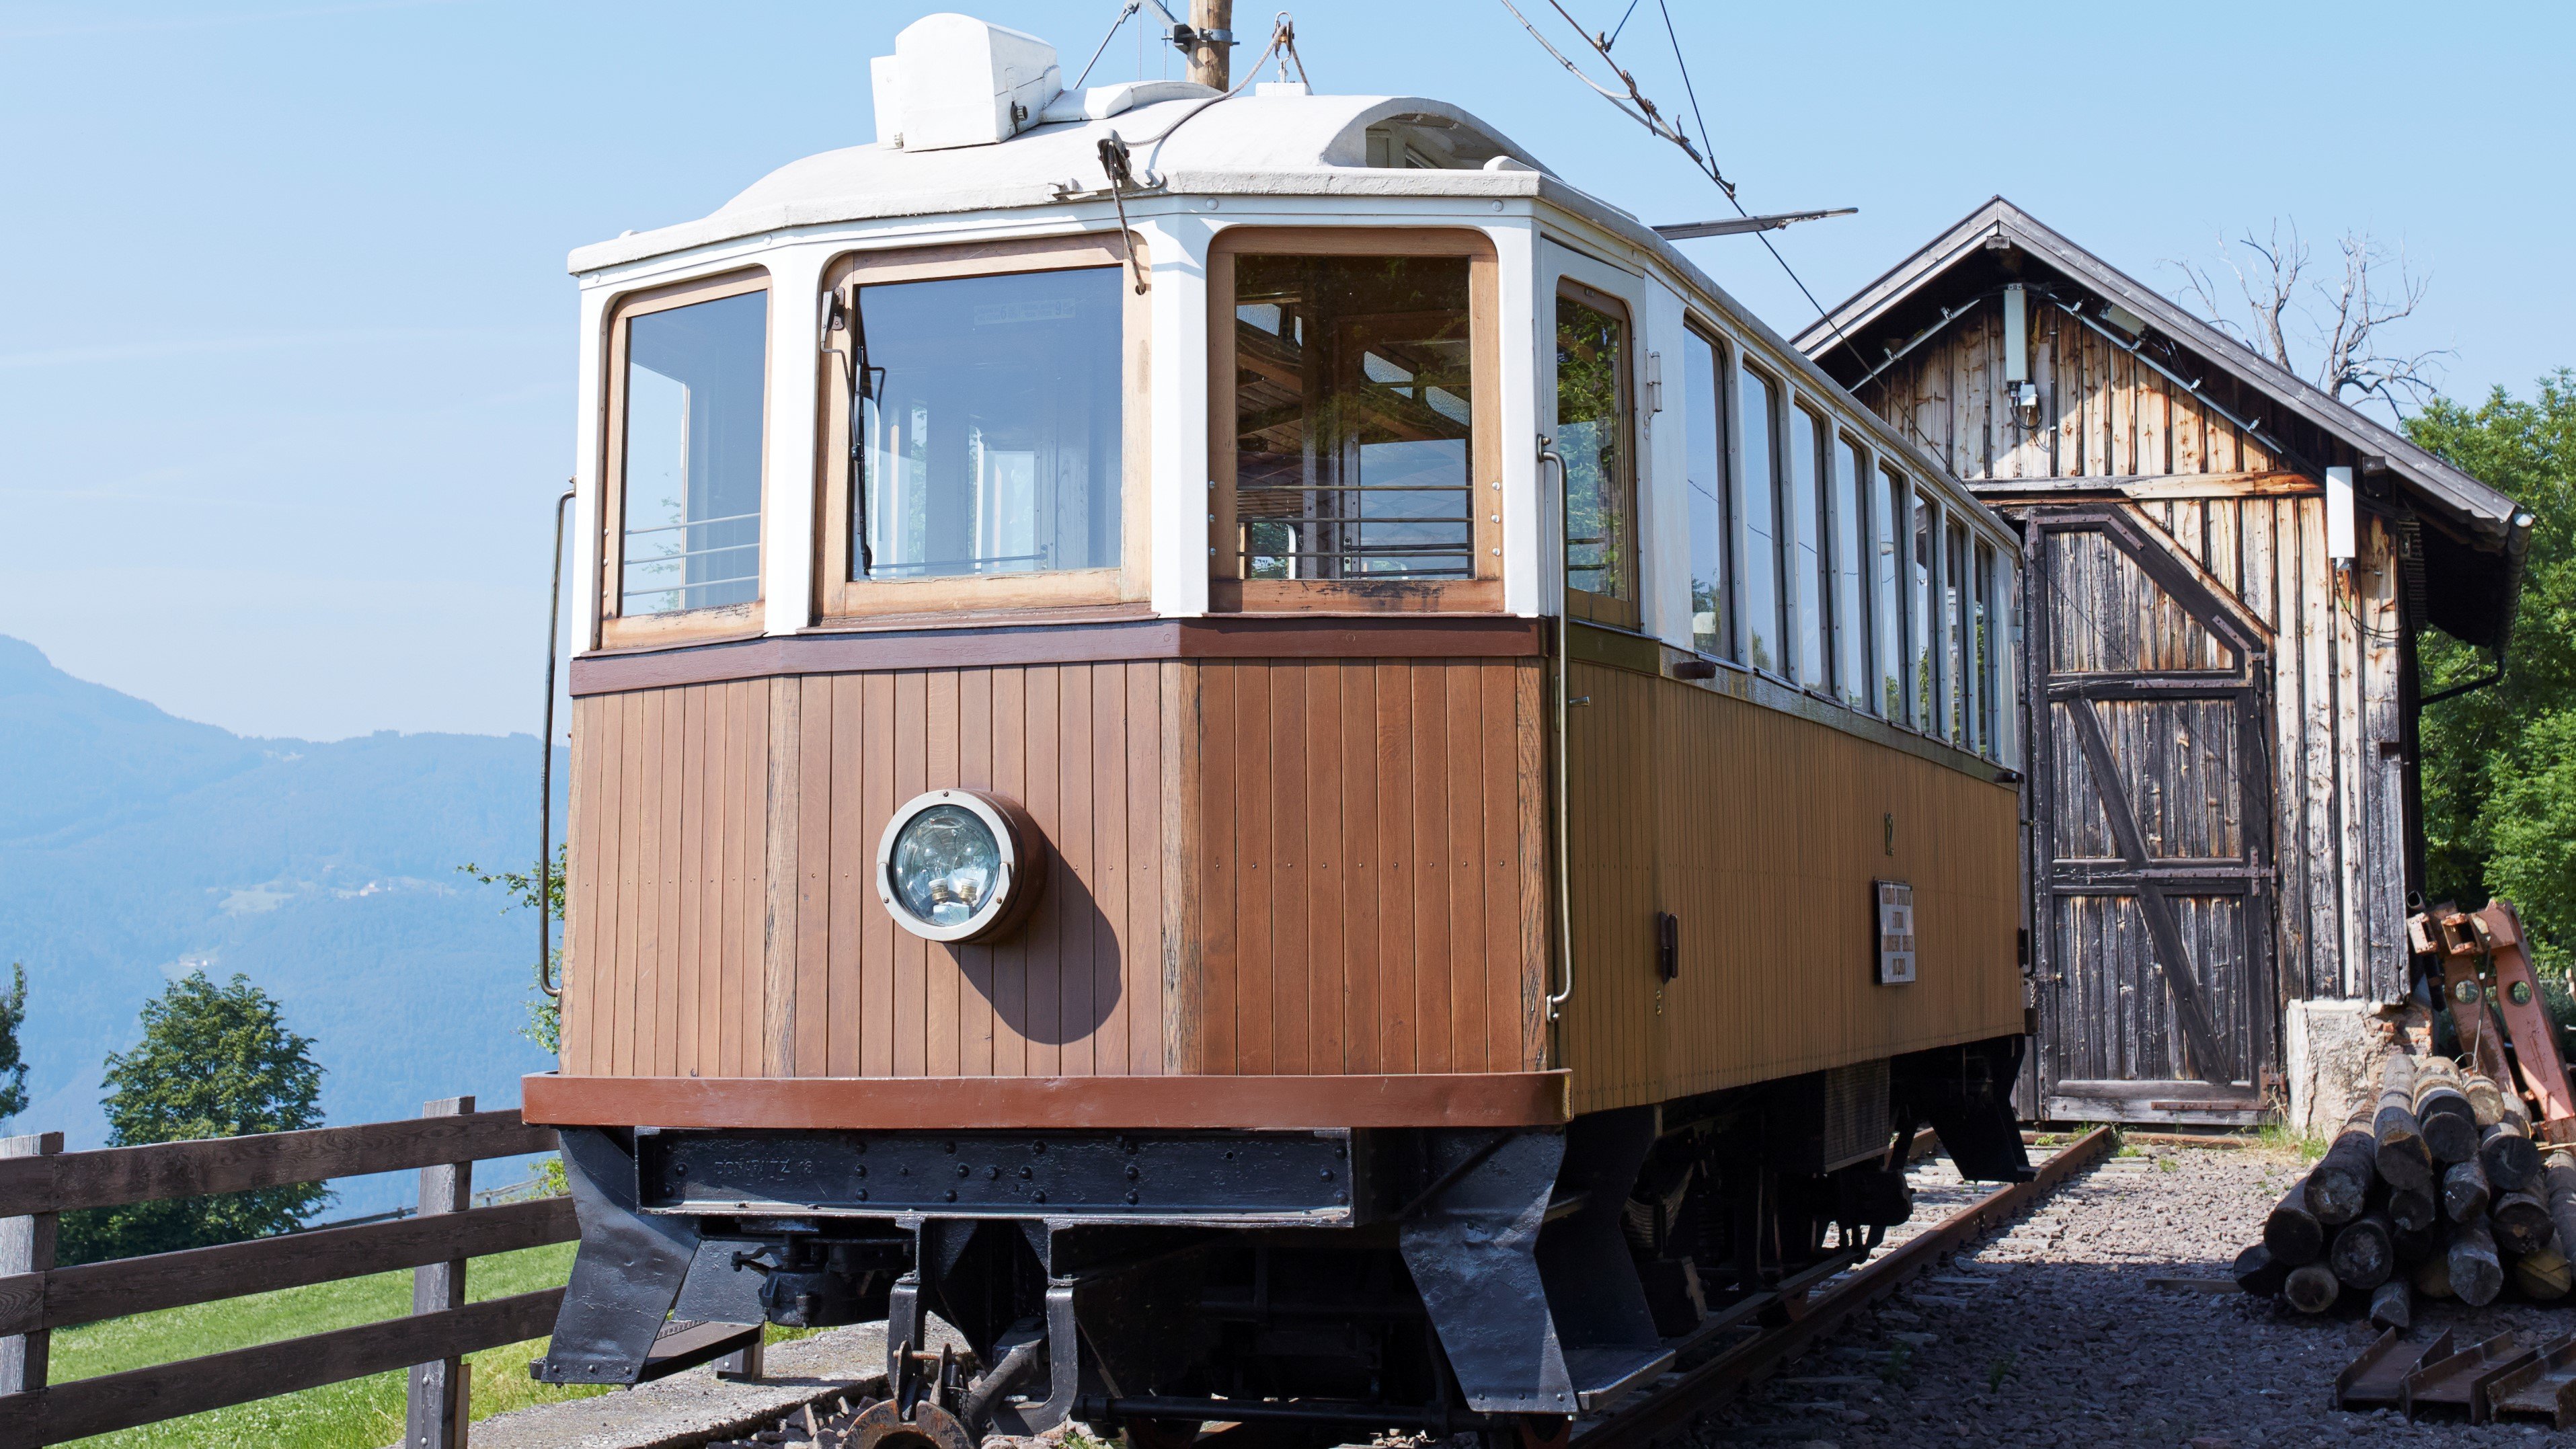 A historic railcar of the Renon/Ritten light railway